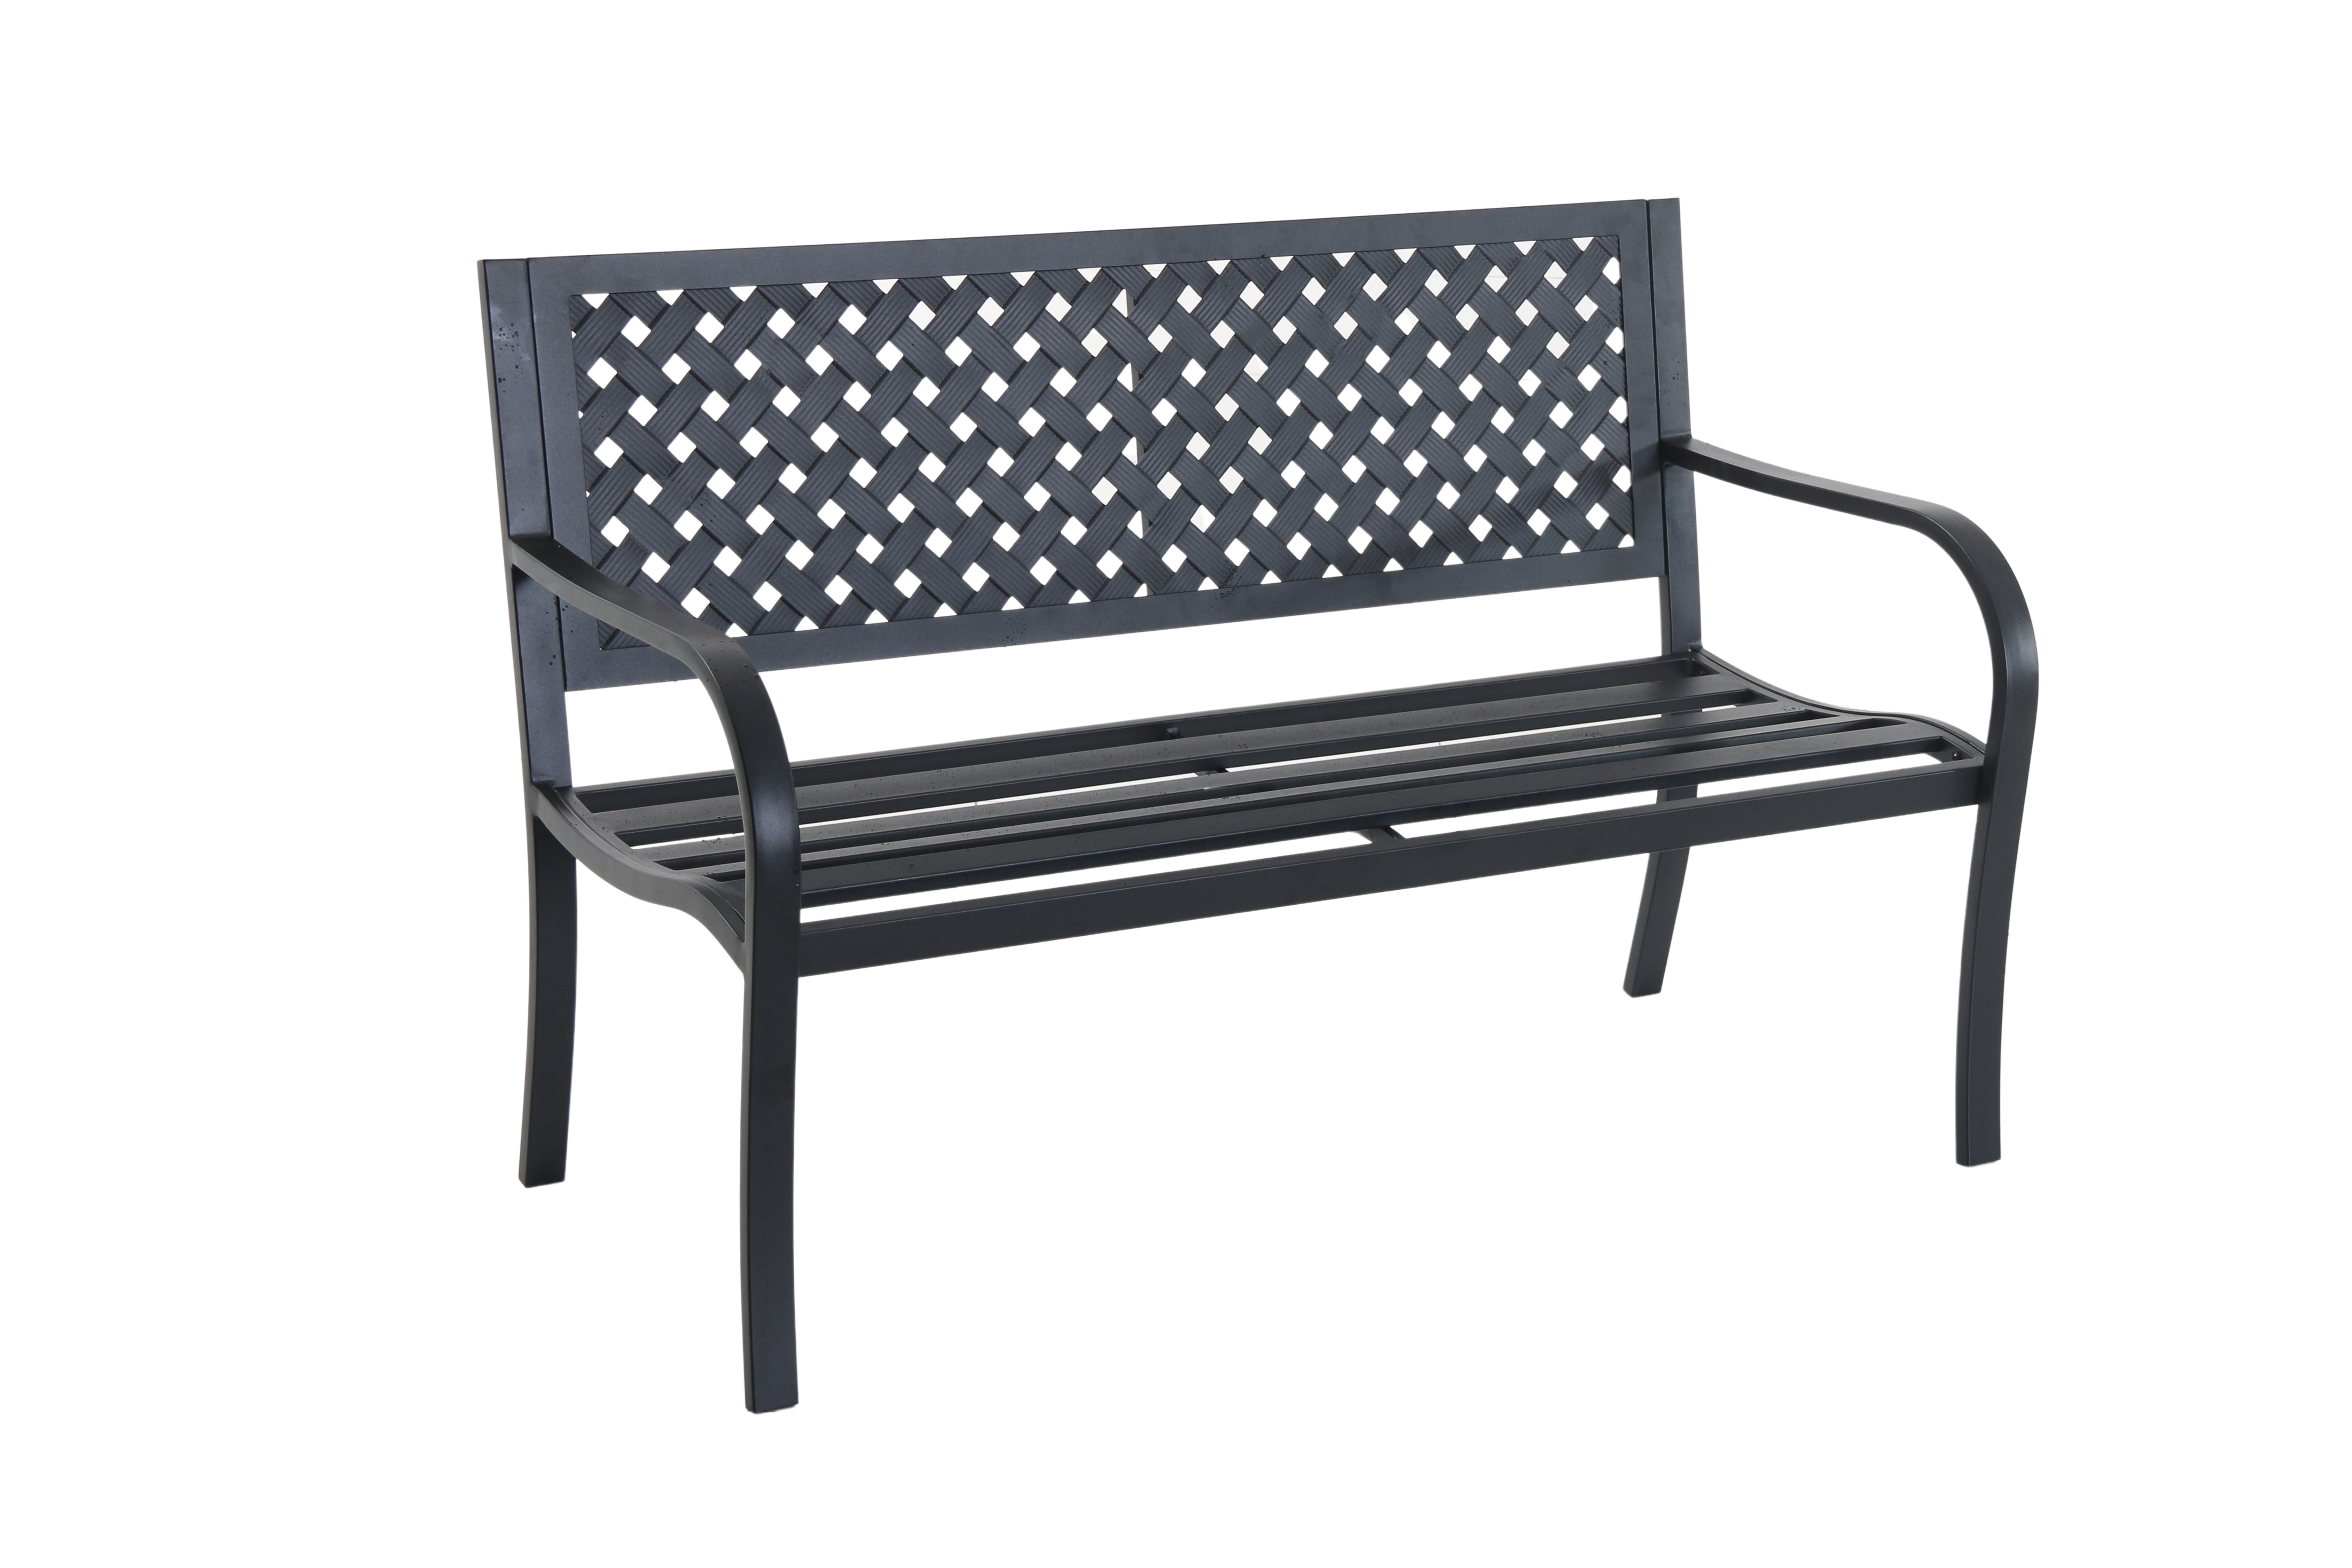 Mainstays Outdoor Durable Steel Bench - Black - 2